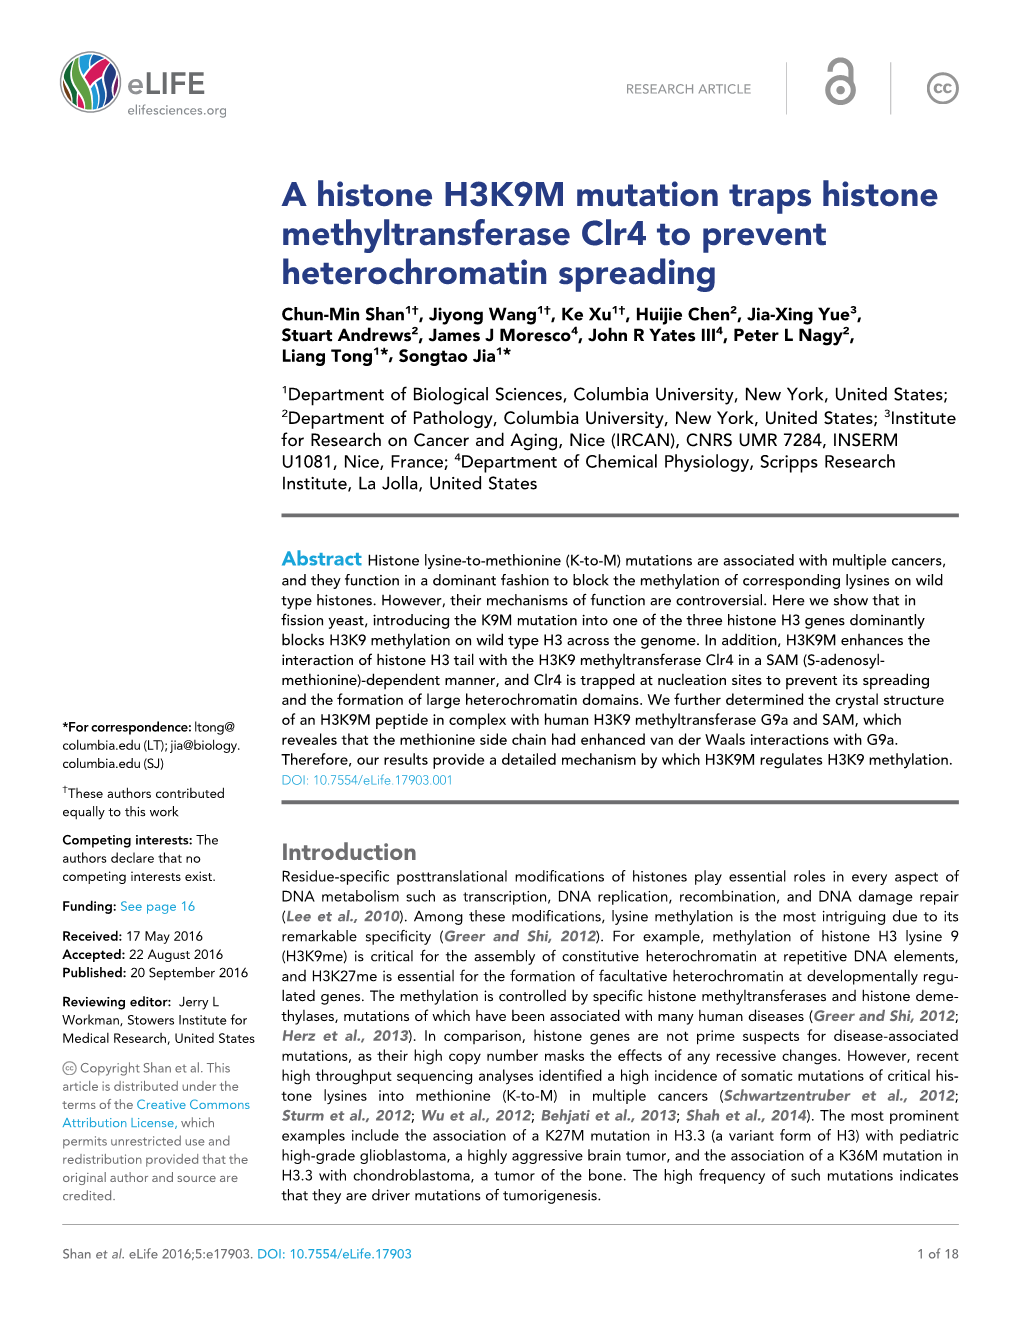 A Histone H3K9M Mutation Traps Histone Methyltransferase Clr4 to Prevent Heterochromatin Spreading